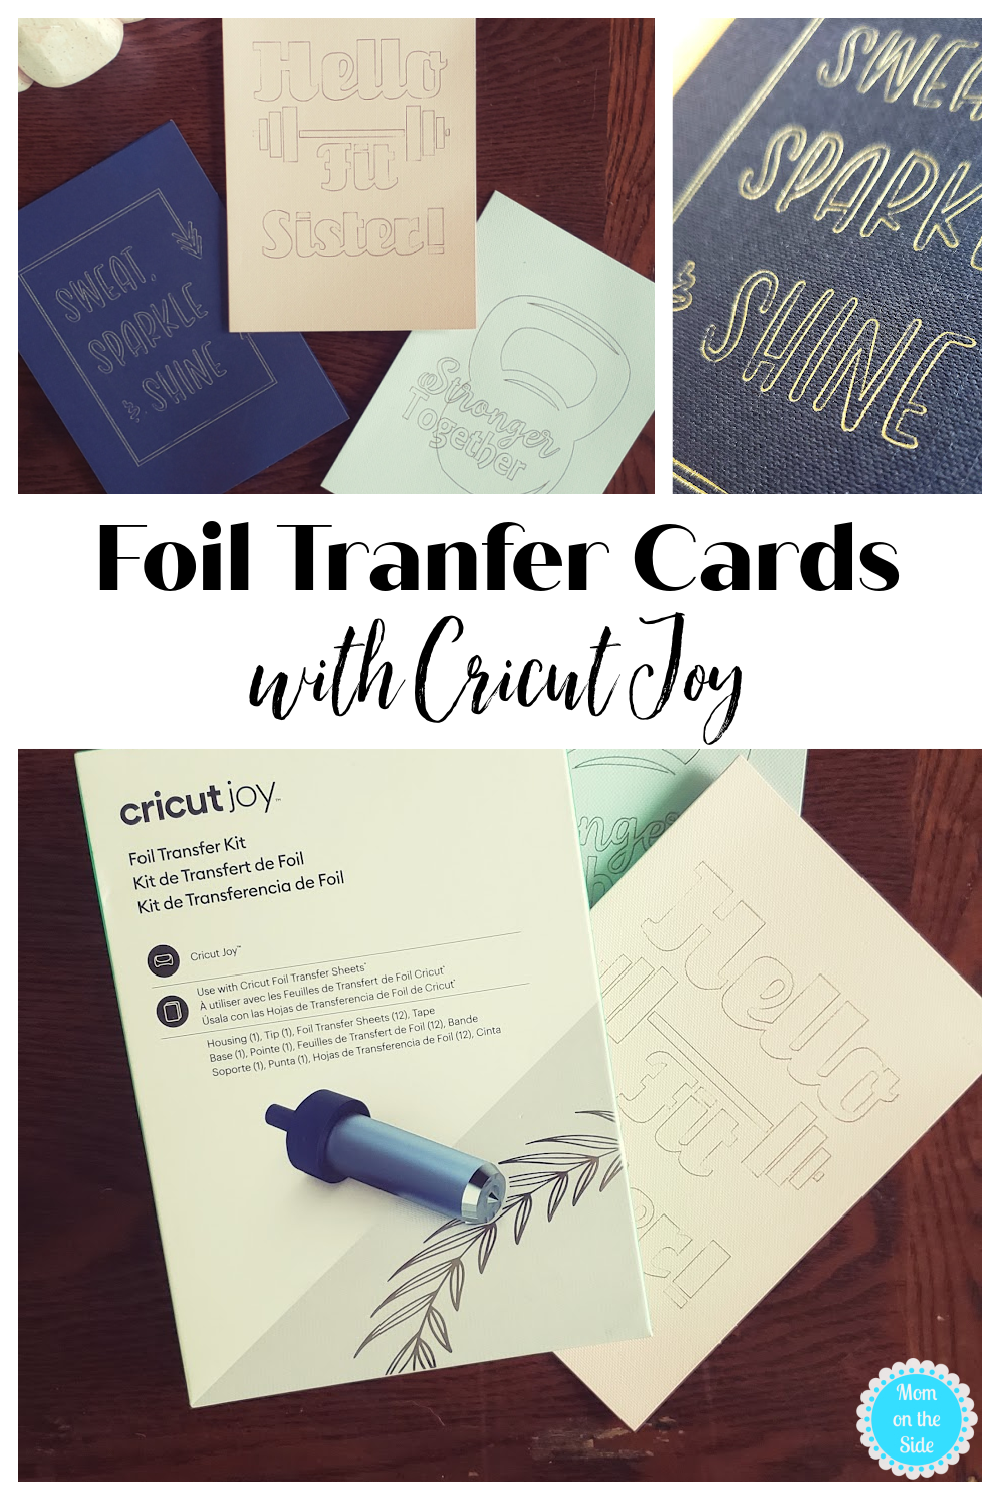 Buy Cricut Joy Foil Transfer Kit